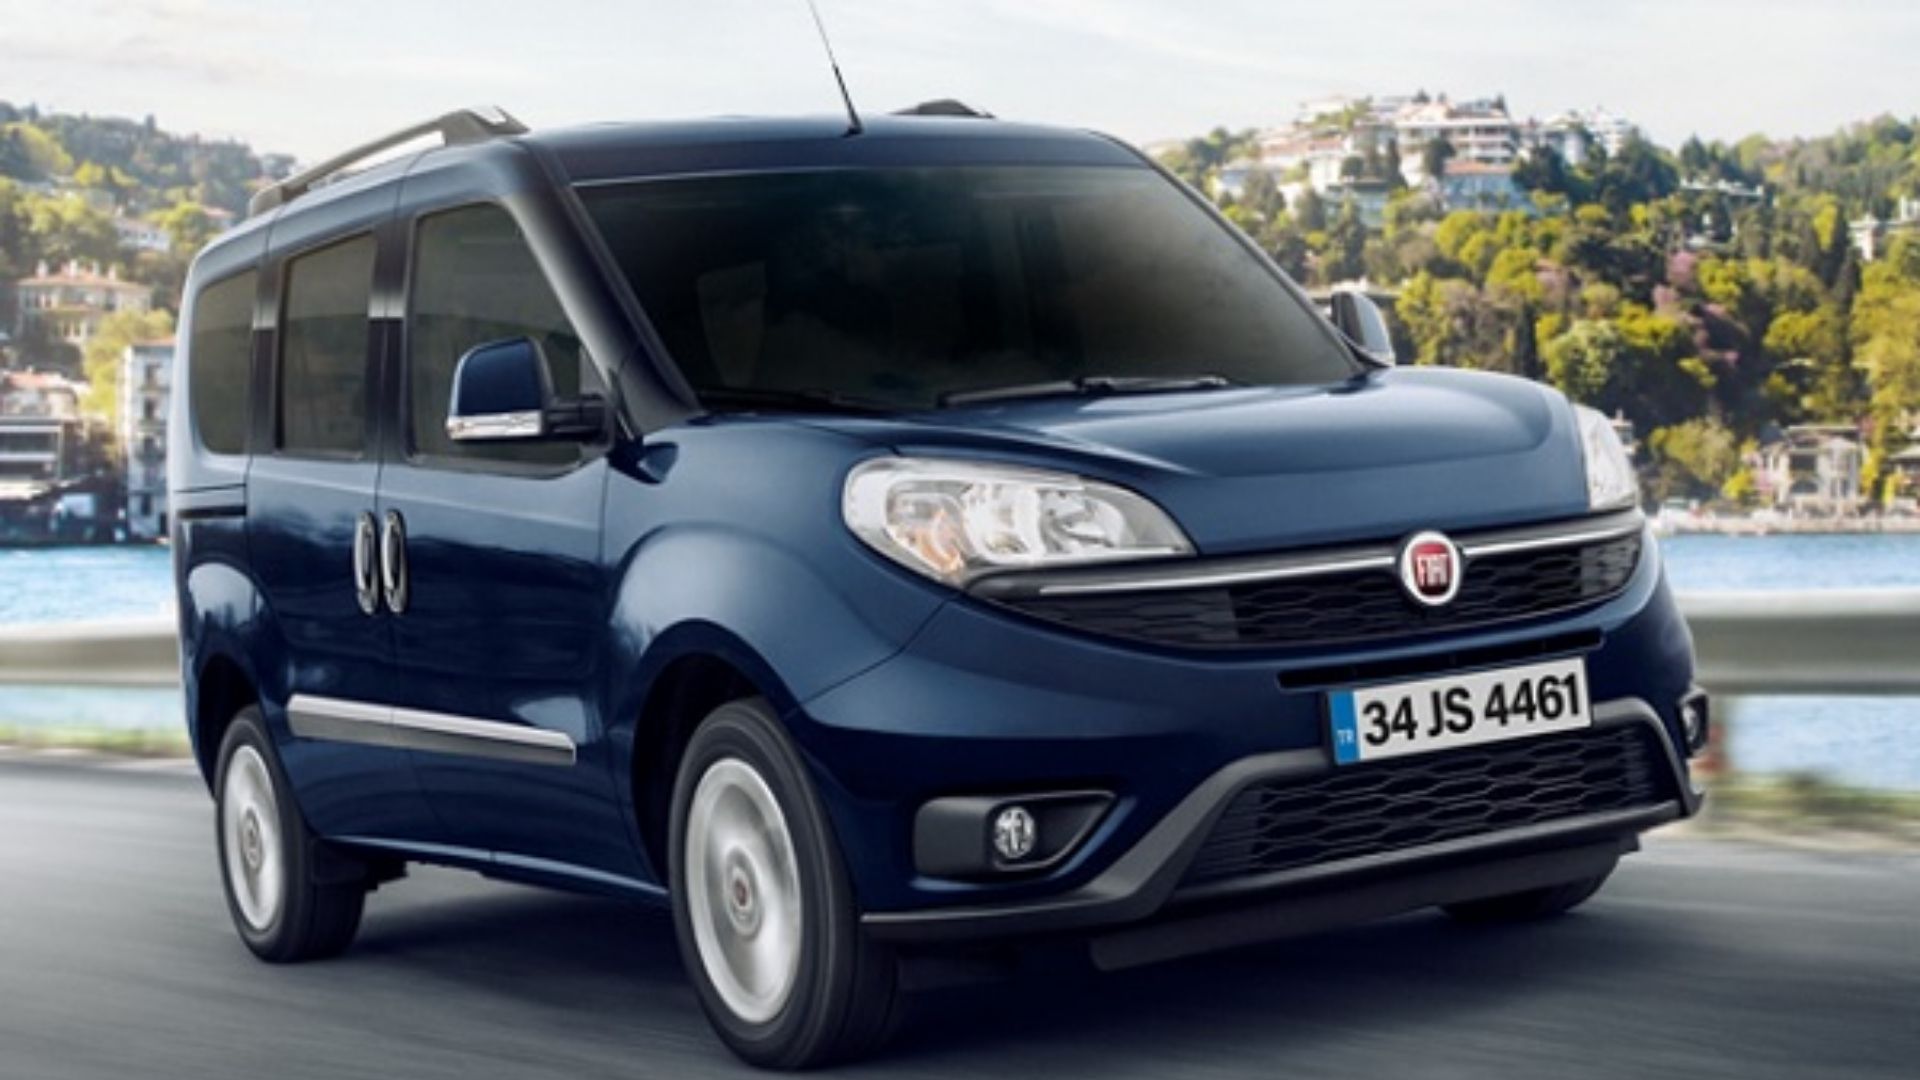 Fiat Doblo Combi performance, engines and fuel consumption: